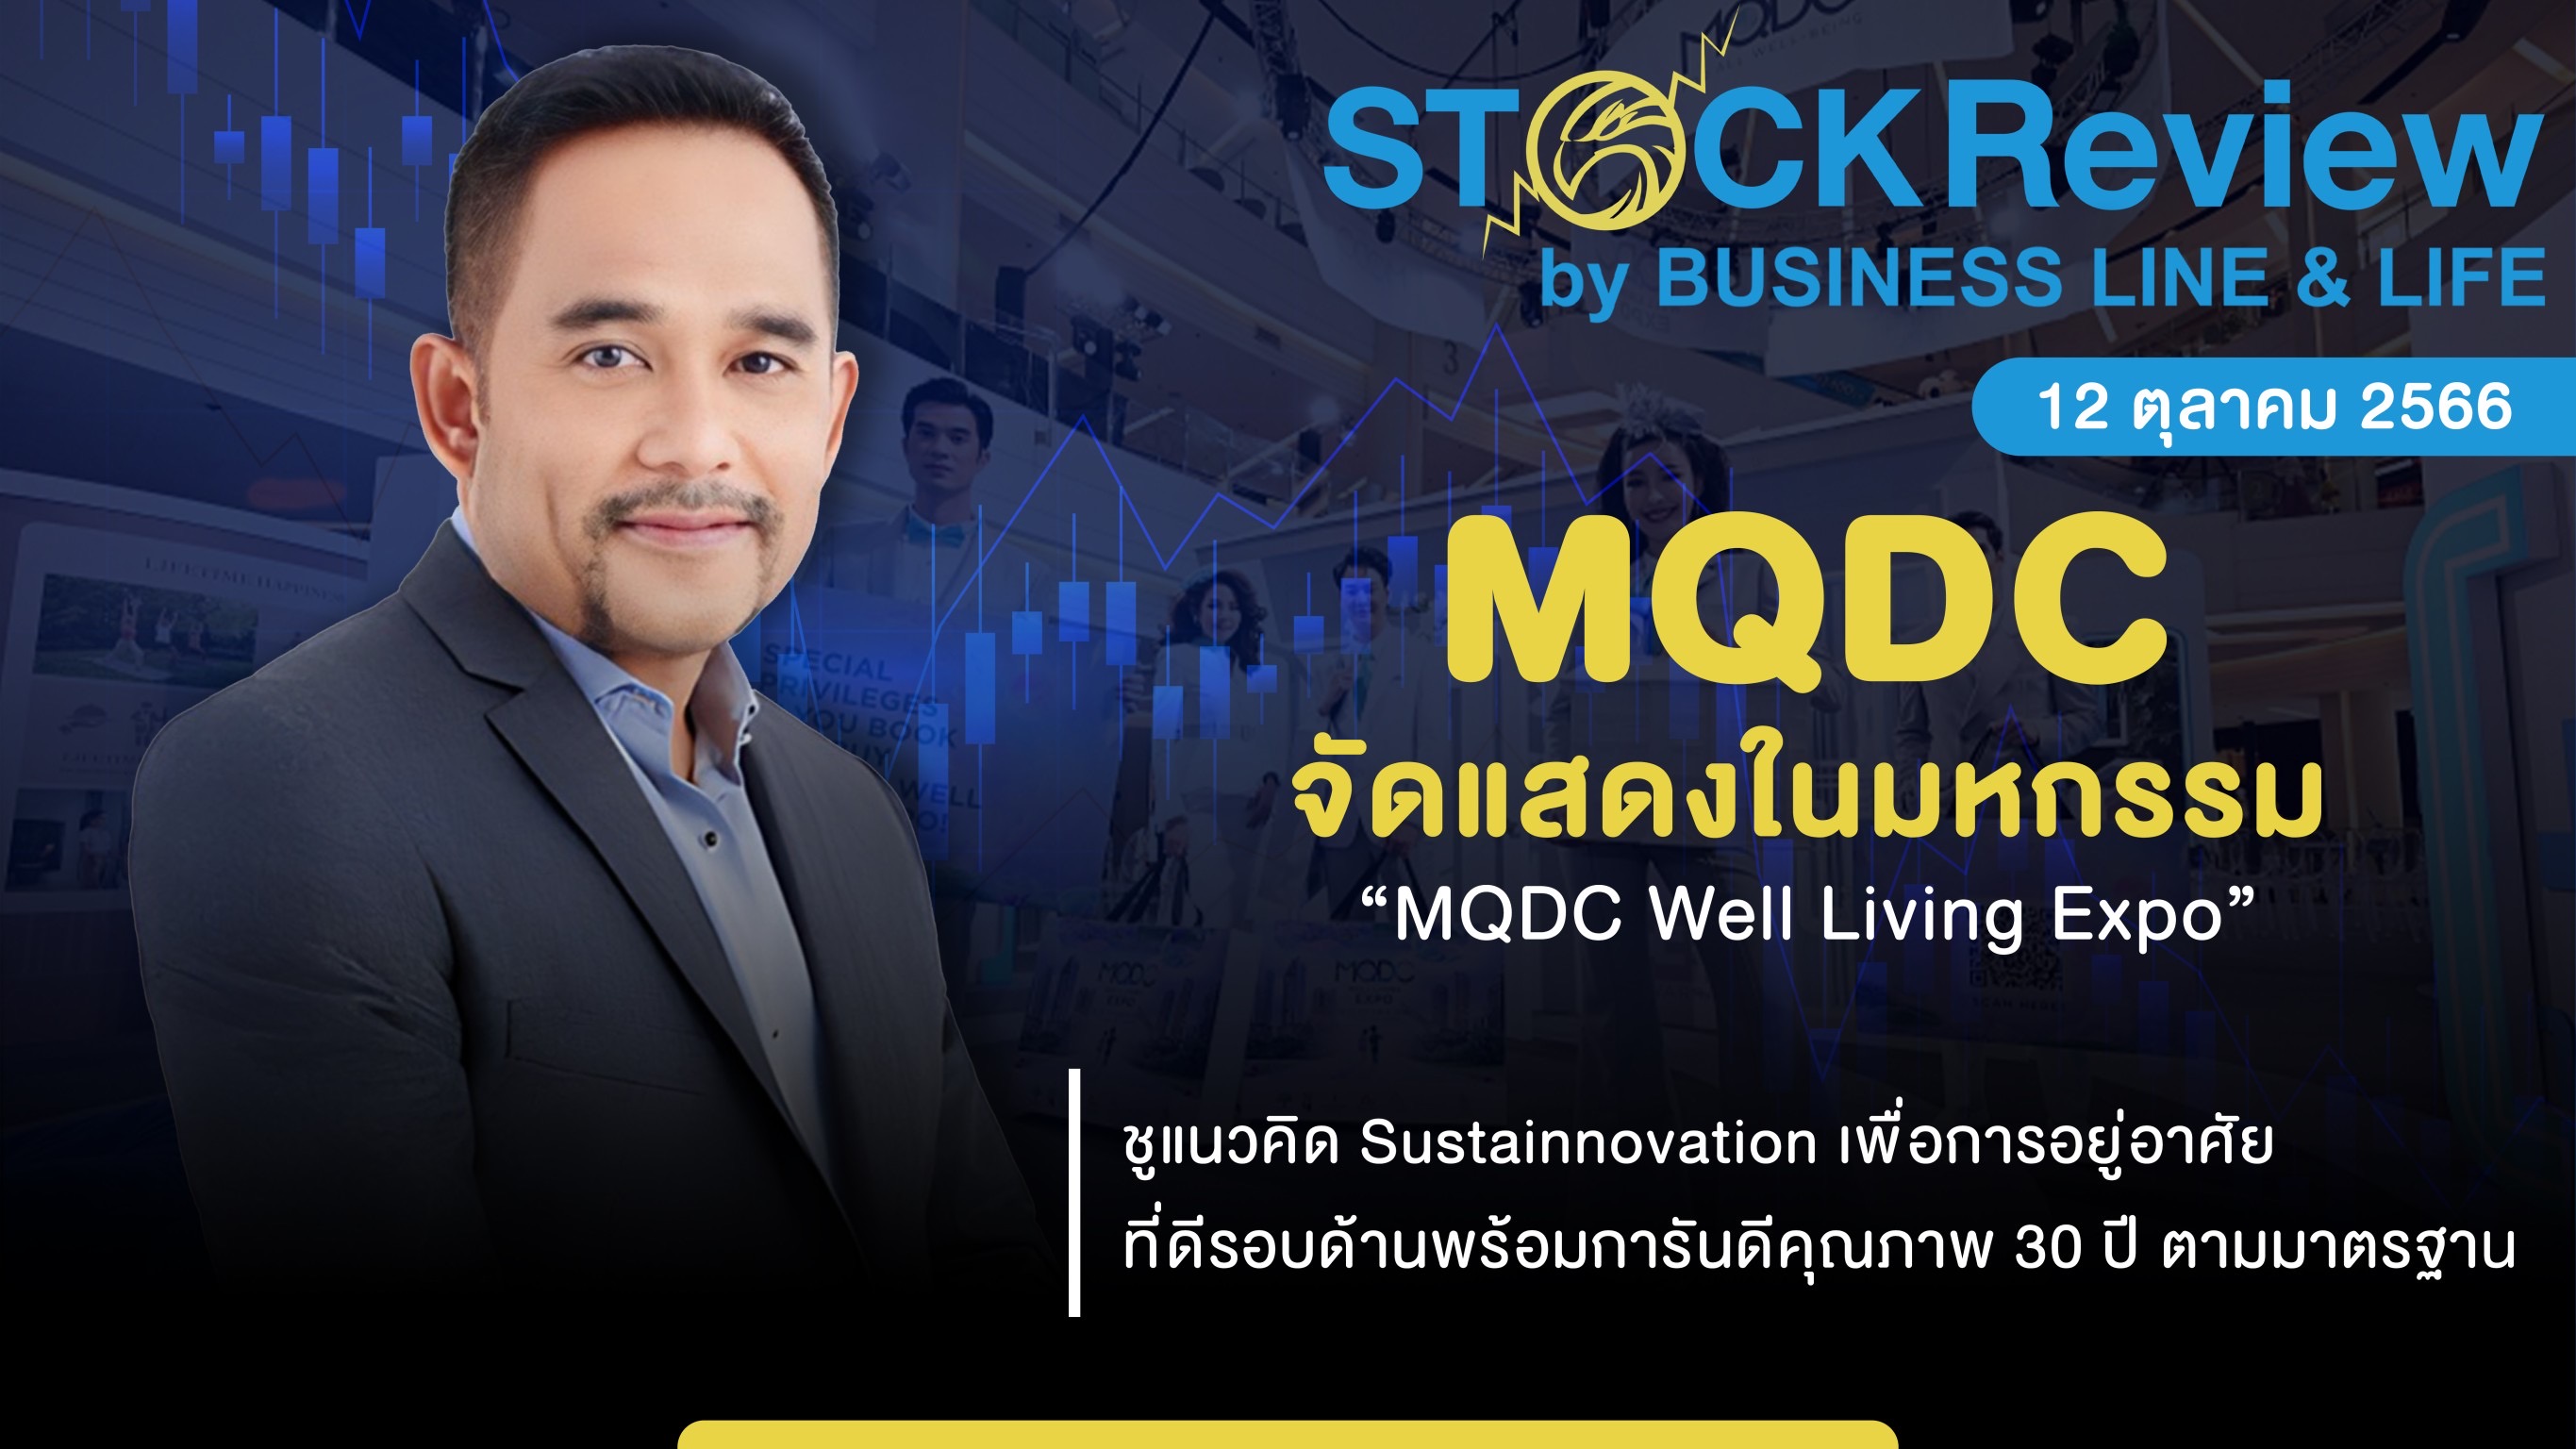 MQDC จัดแสดงในมหกรรม “MQDC Well Living Expo” ชูแนวคิด Sustainnovation